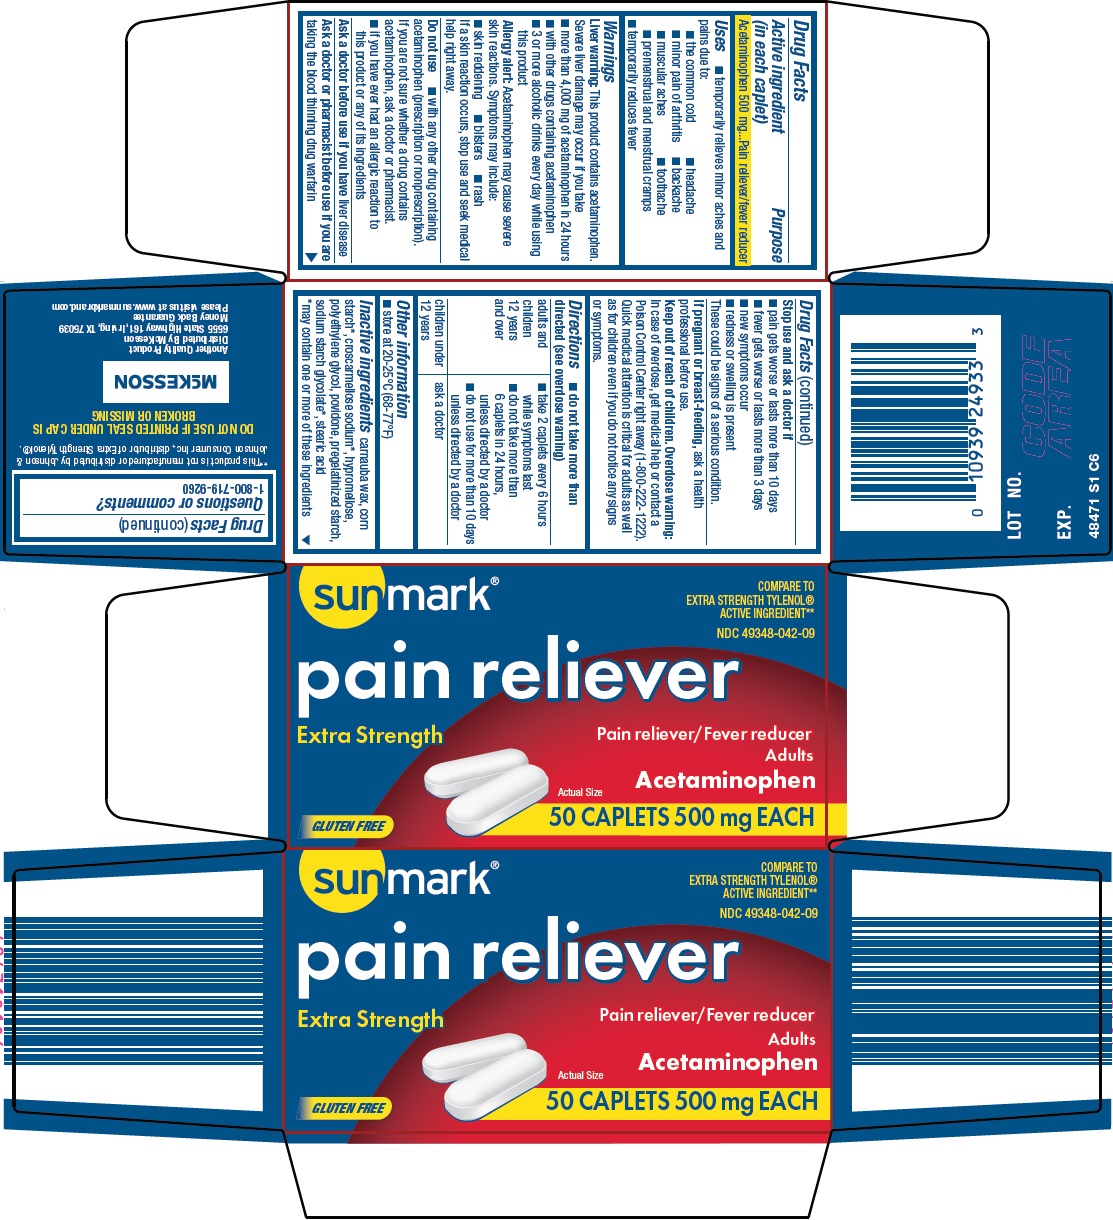 484-s1-pain-reliever.jpg